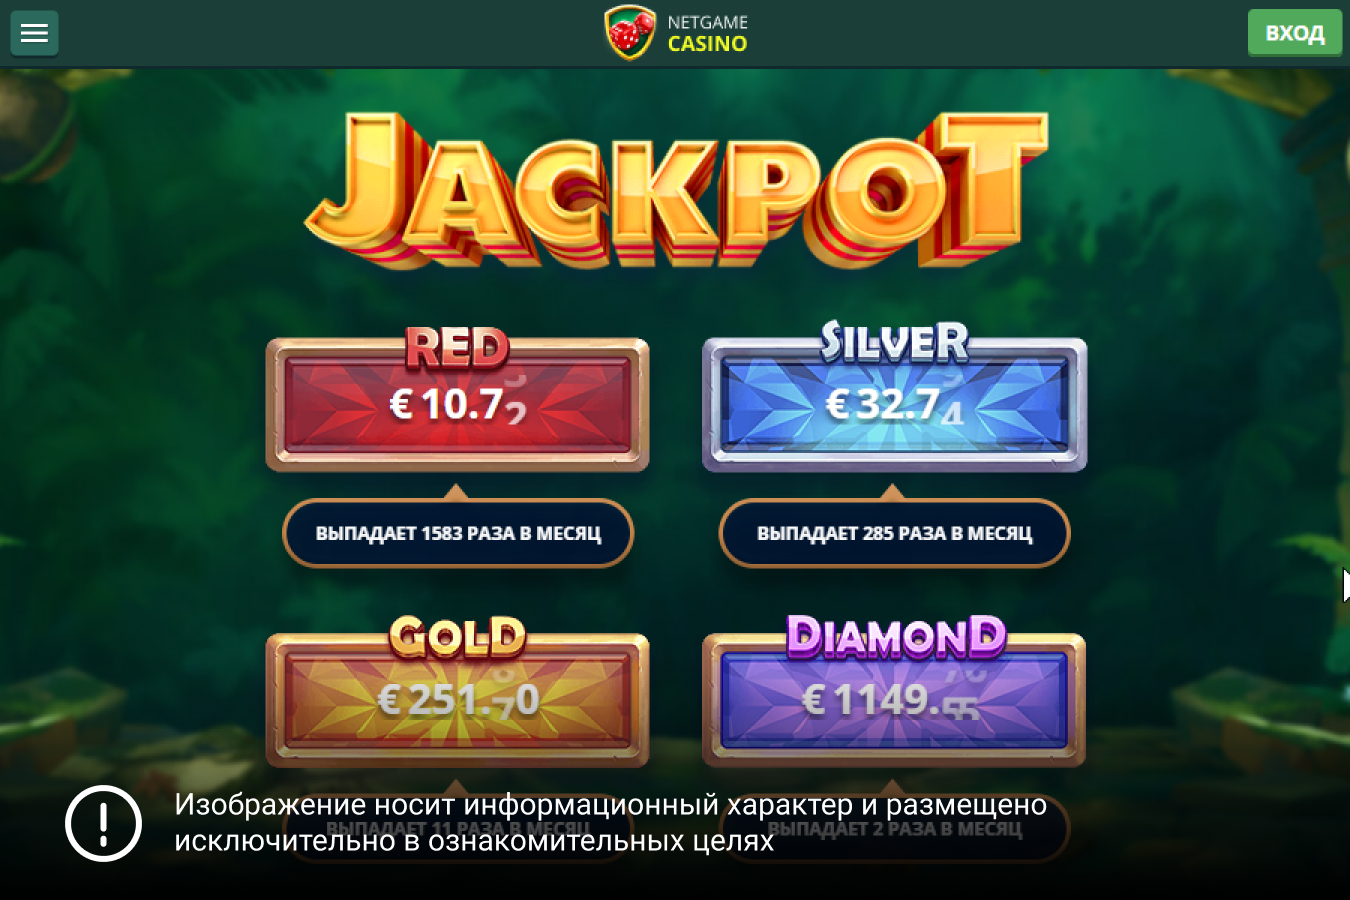 Netgame Casino Online Jackpot